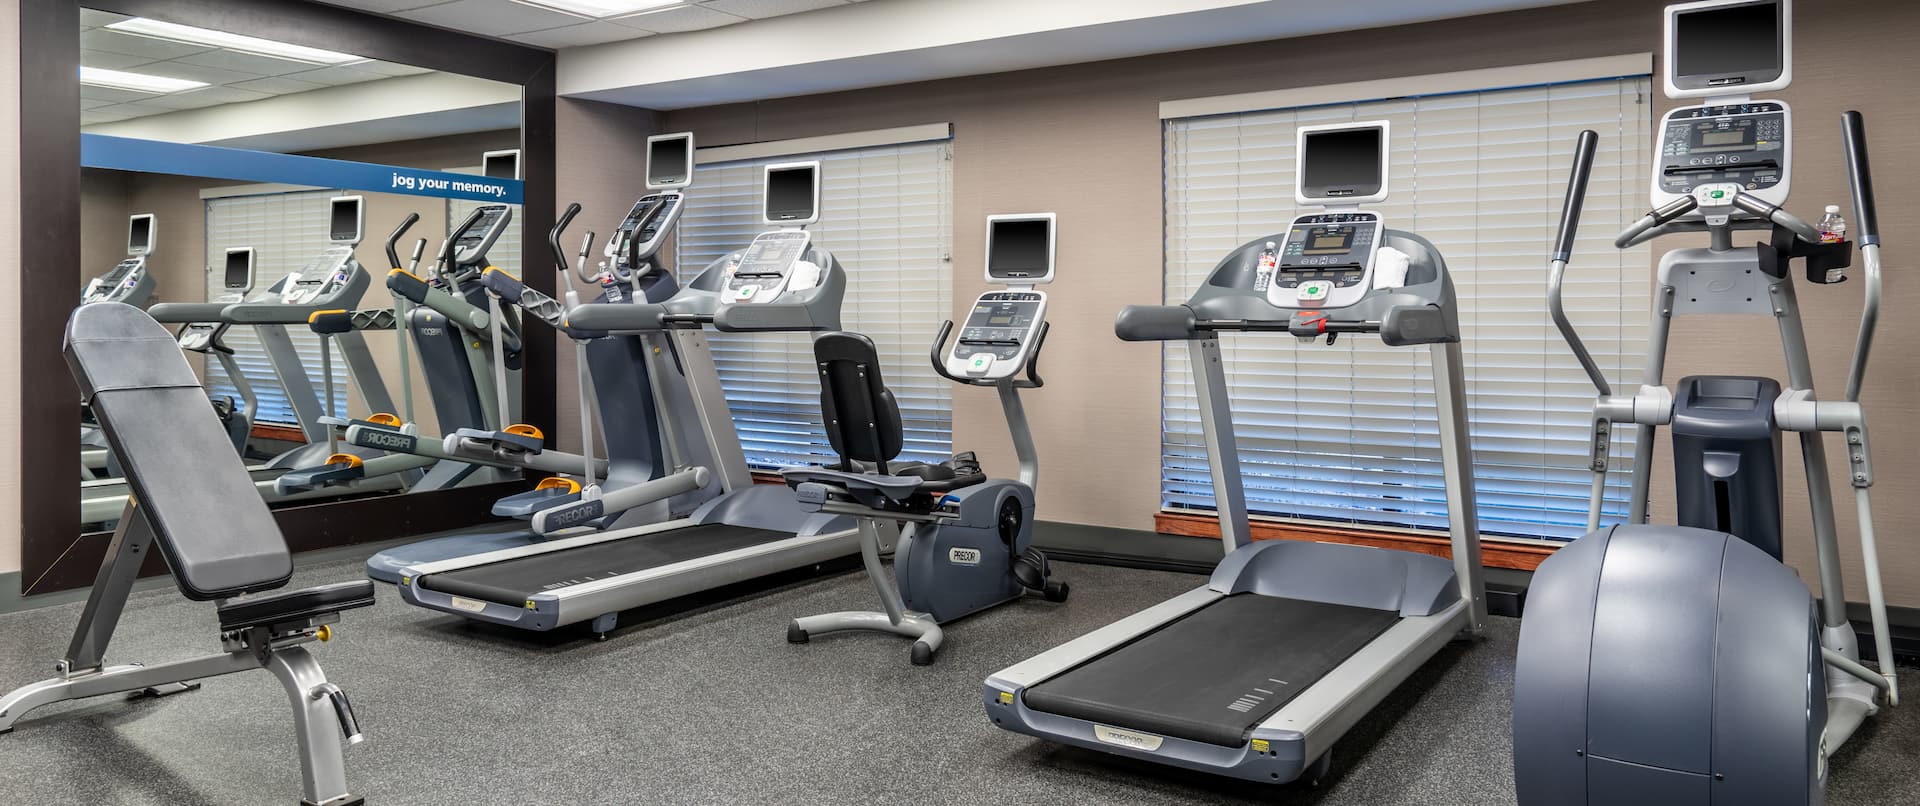 Treadmills and Recumbent Bikes in Fitness Center